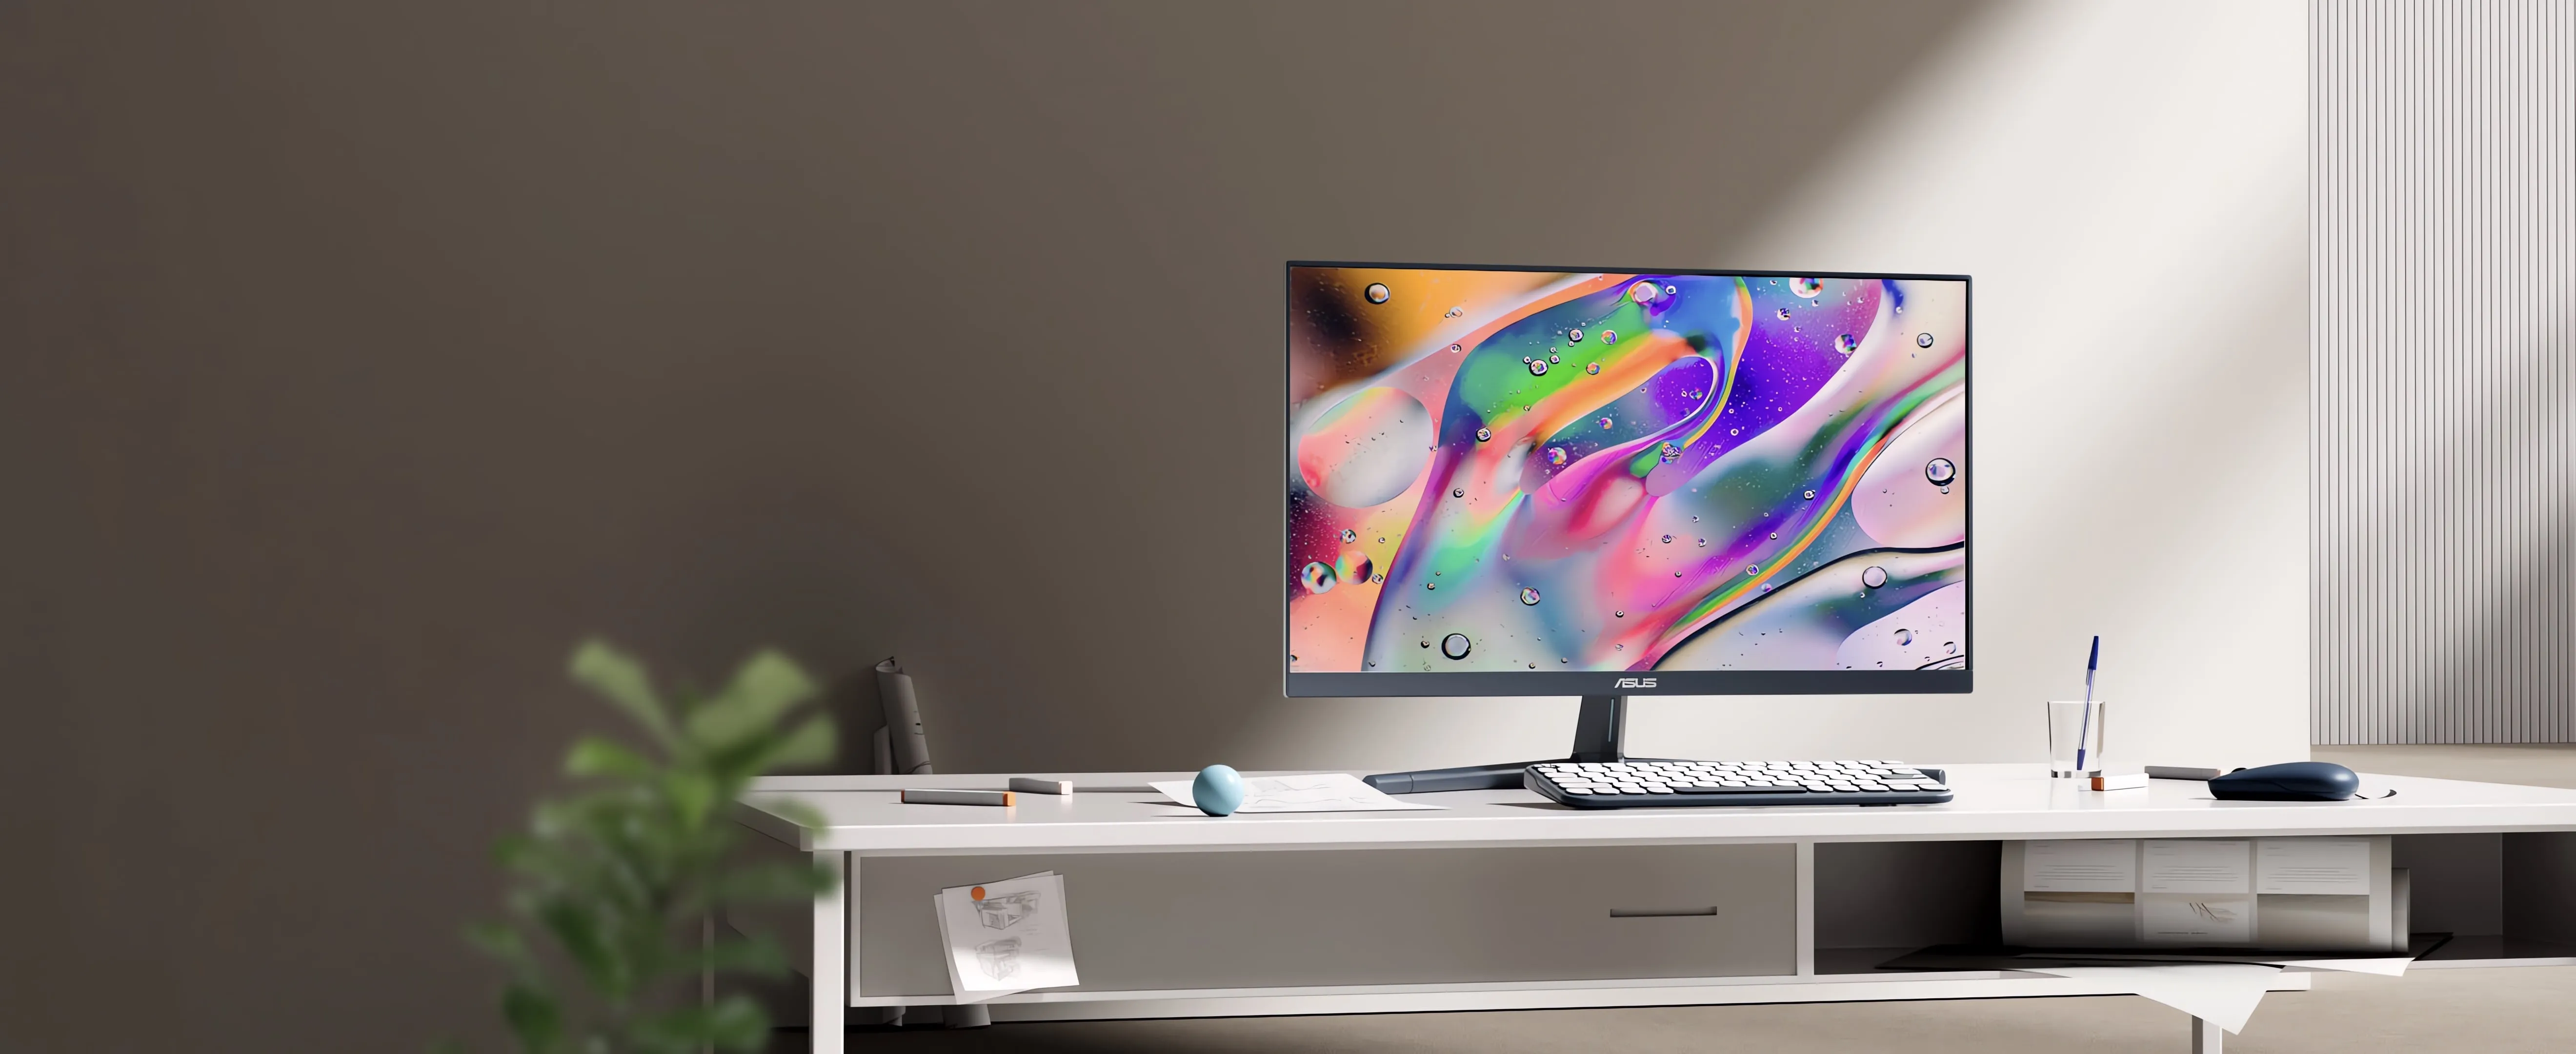 A VU monitor showcasing vibrant visuals